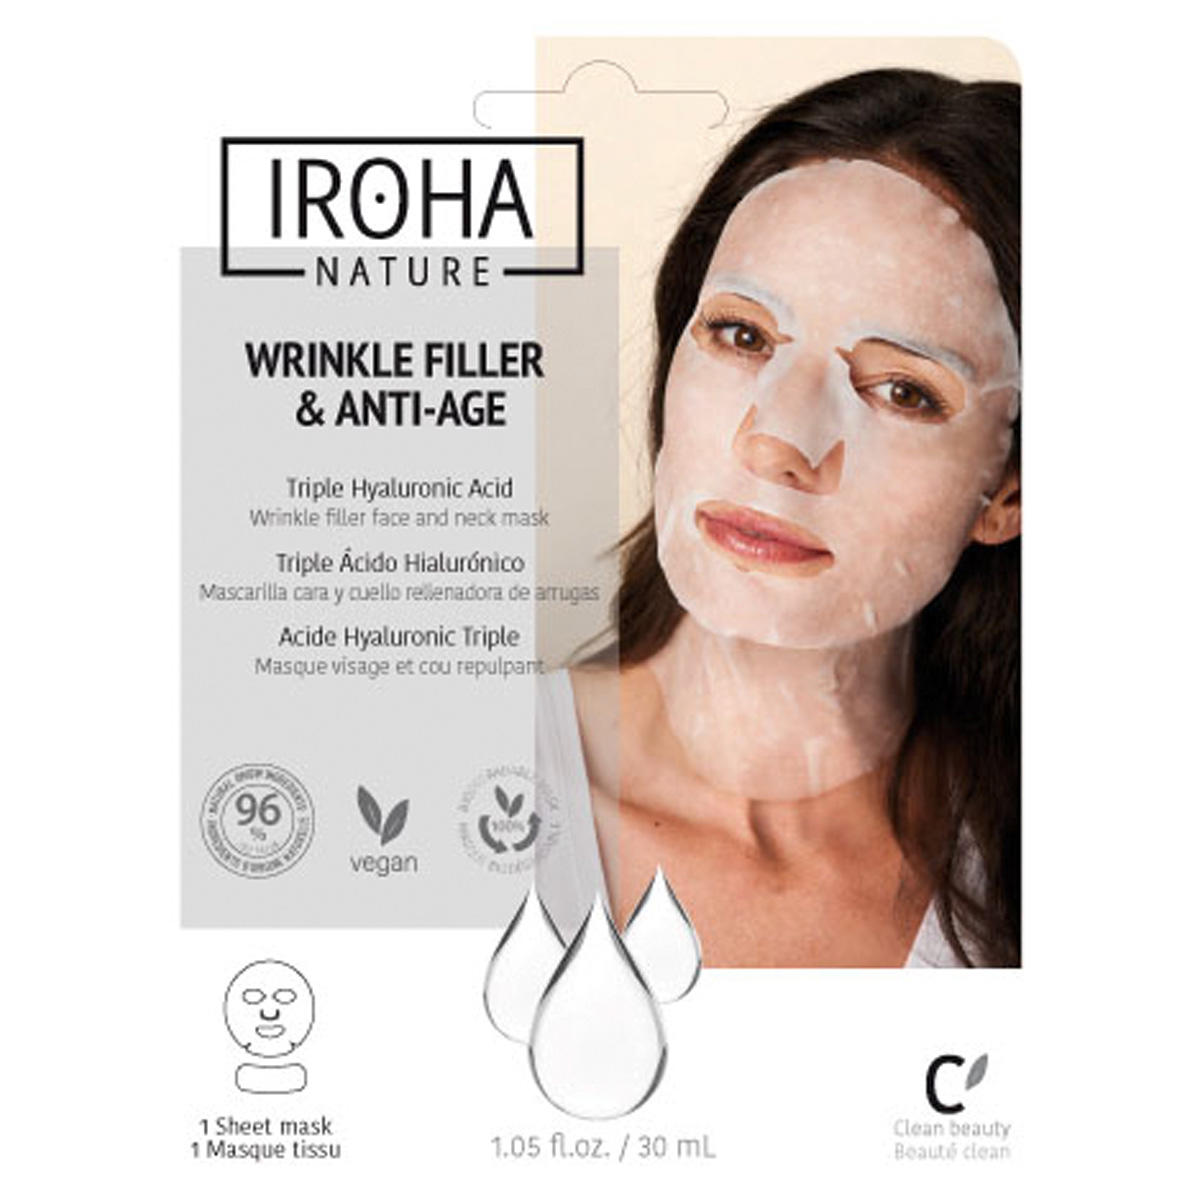 IROHA nature Wrinkle Filler & Anti-Age Mask 1 Stück - 1